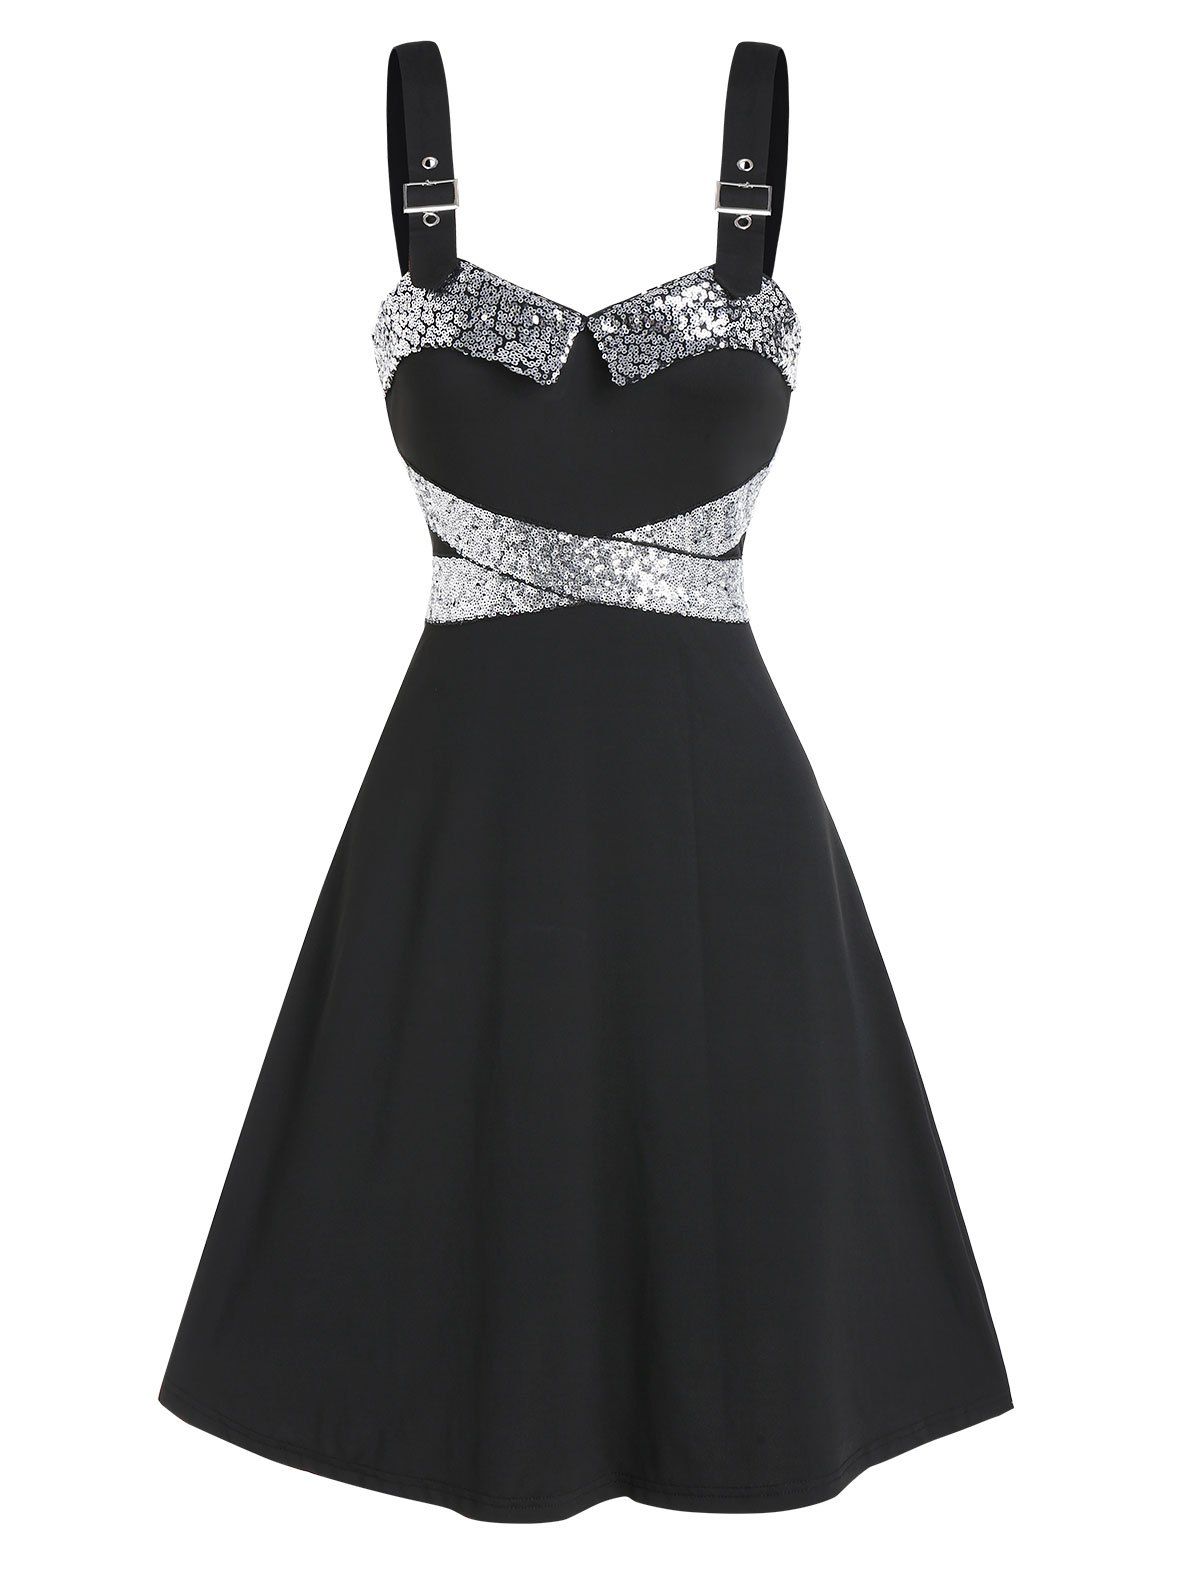 Sparkling Sweetheart Neck A Line Dress - BLACK L